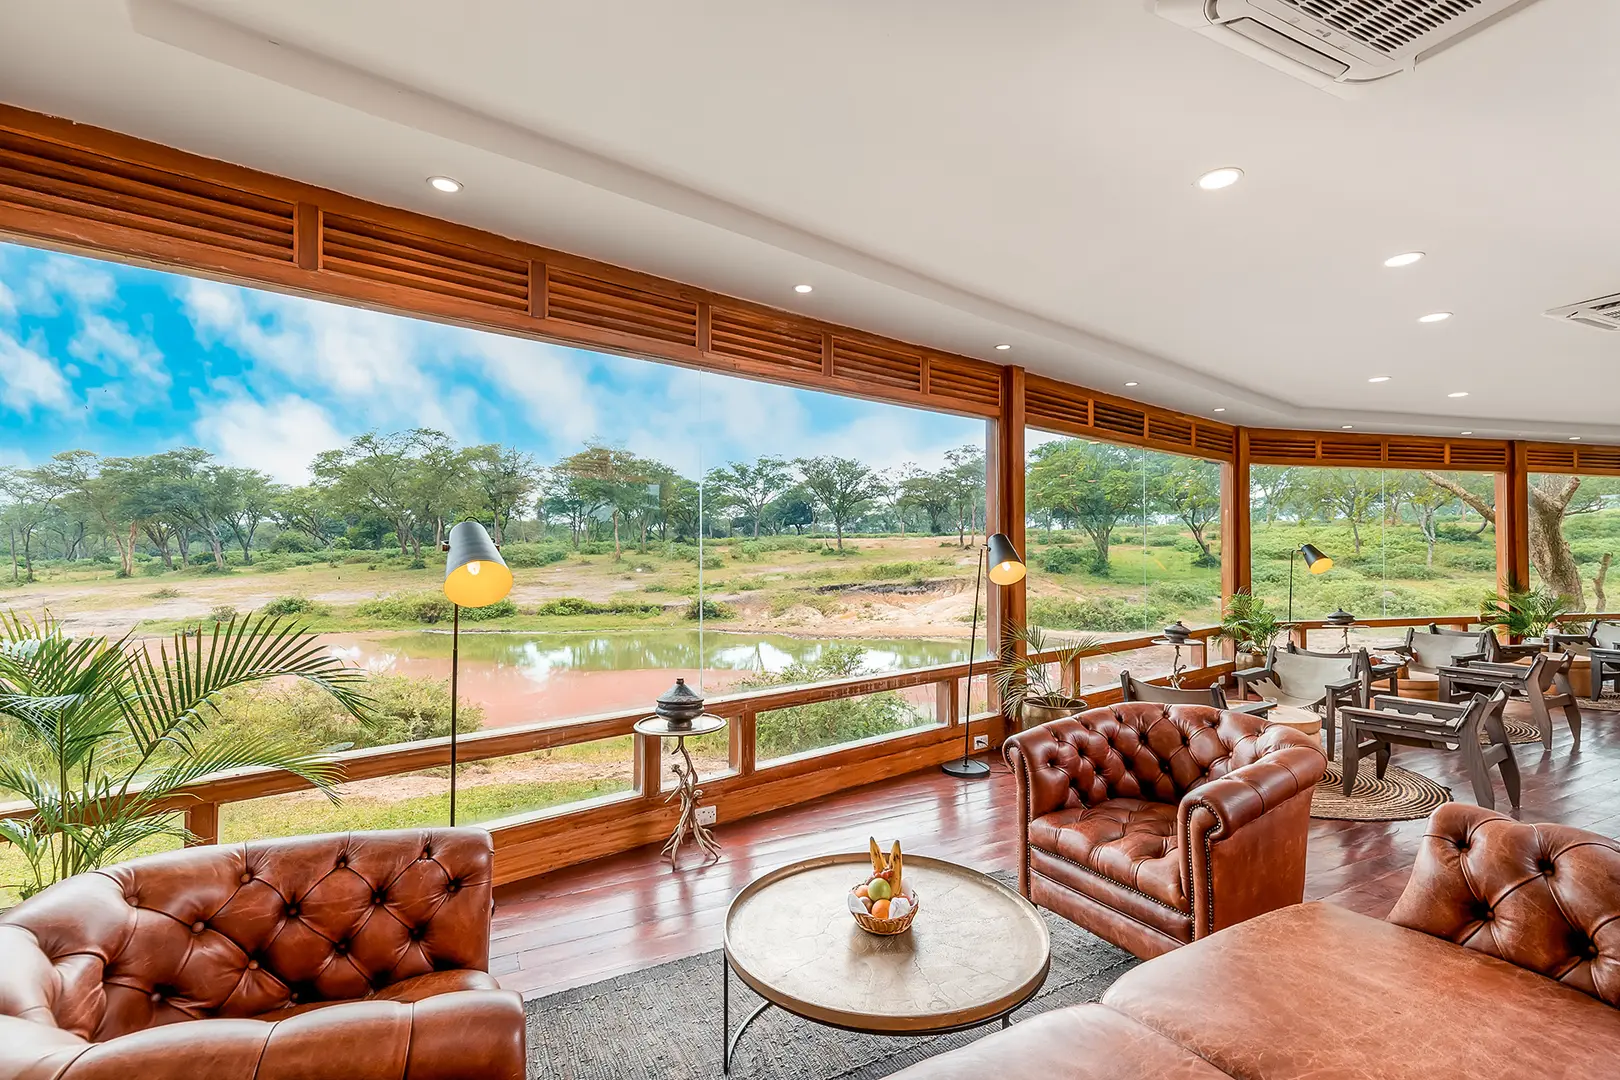 Planning a luxury Uganda Safari - Staying at the luxury Chobe Safari Lodge